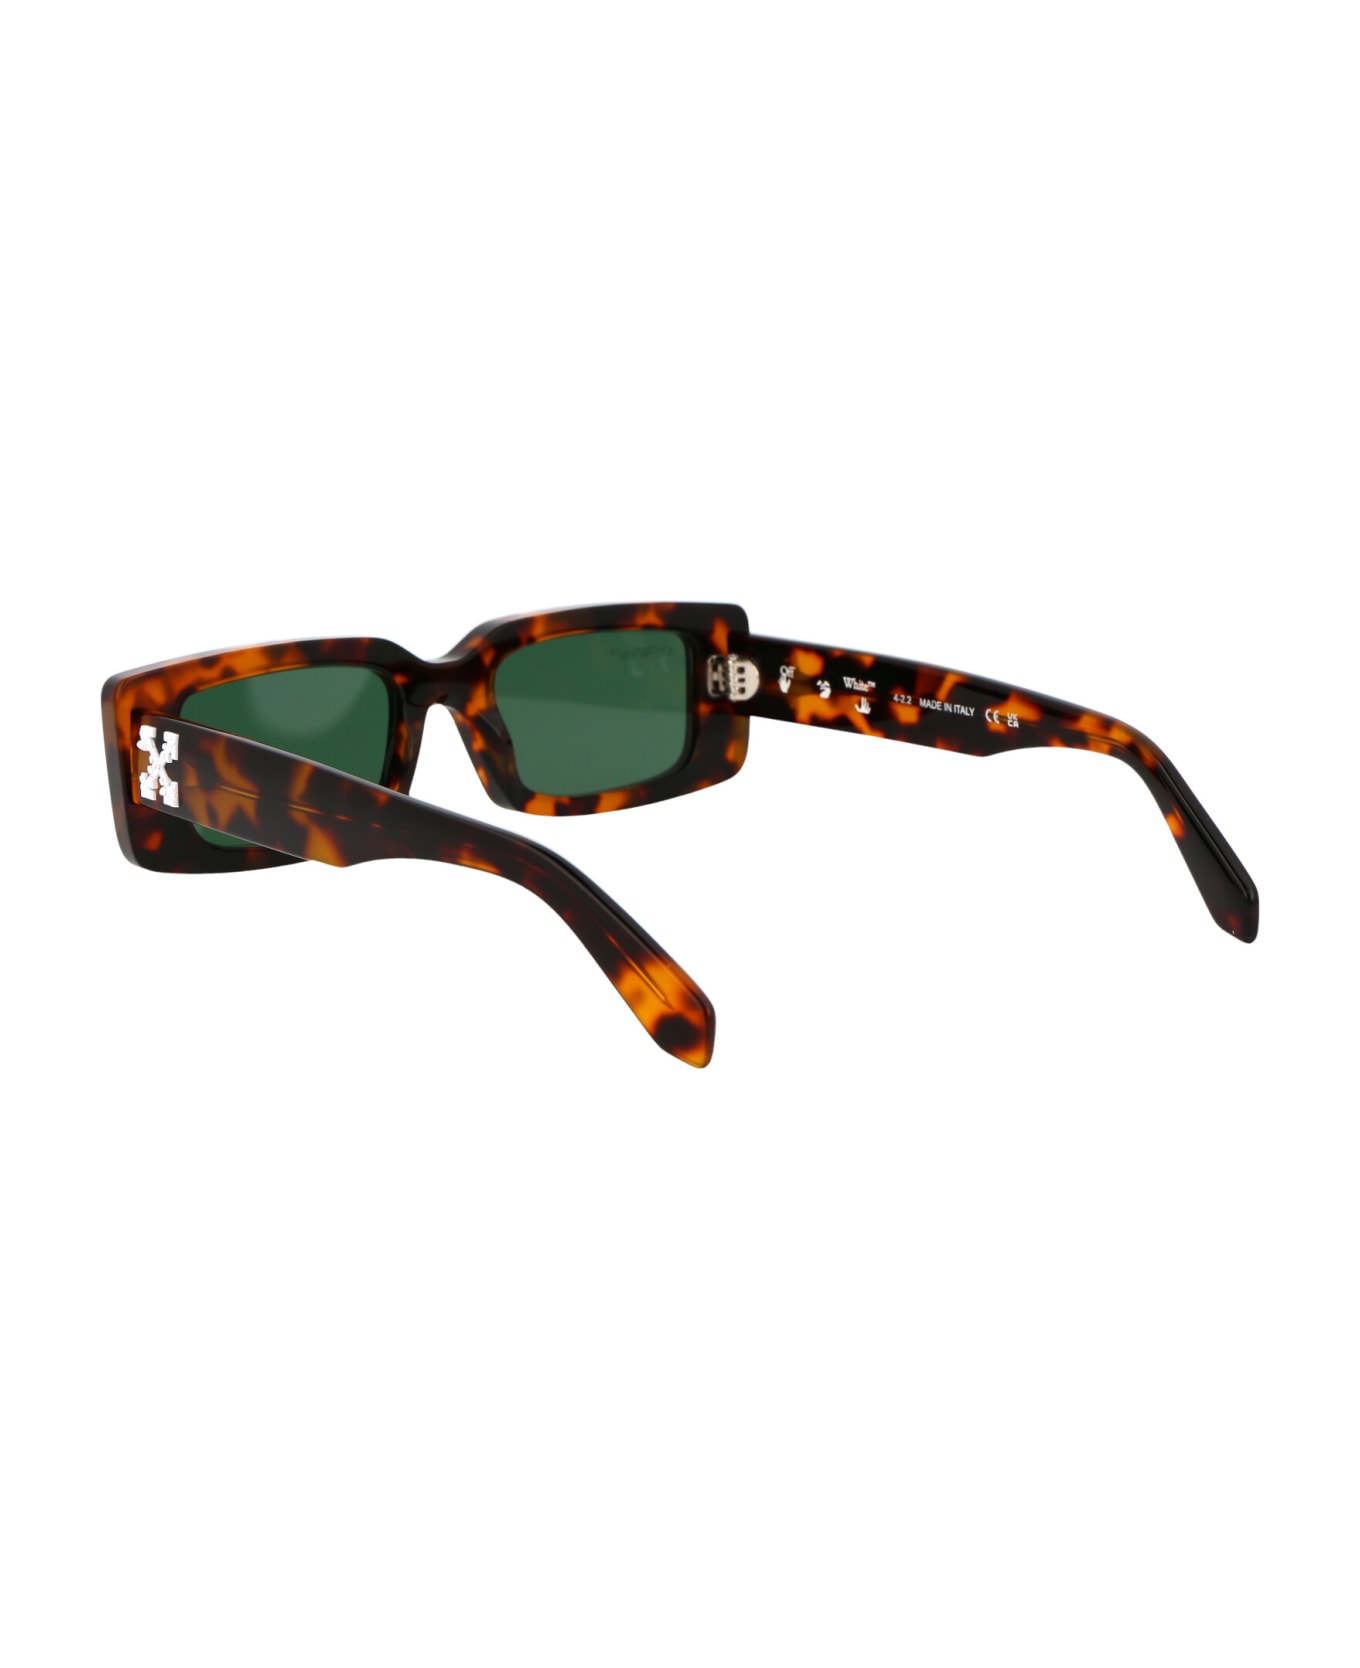 Off-White Arthur Sunglasses - 6455 HAVANA サングラス